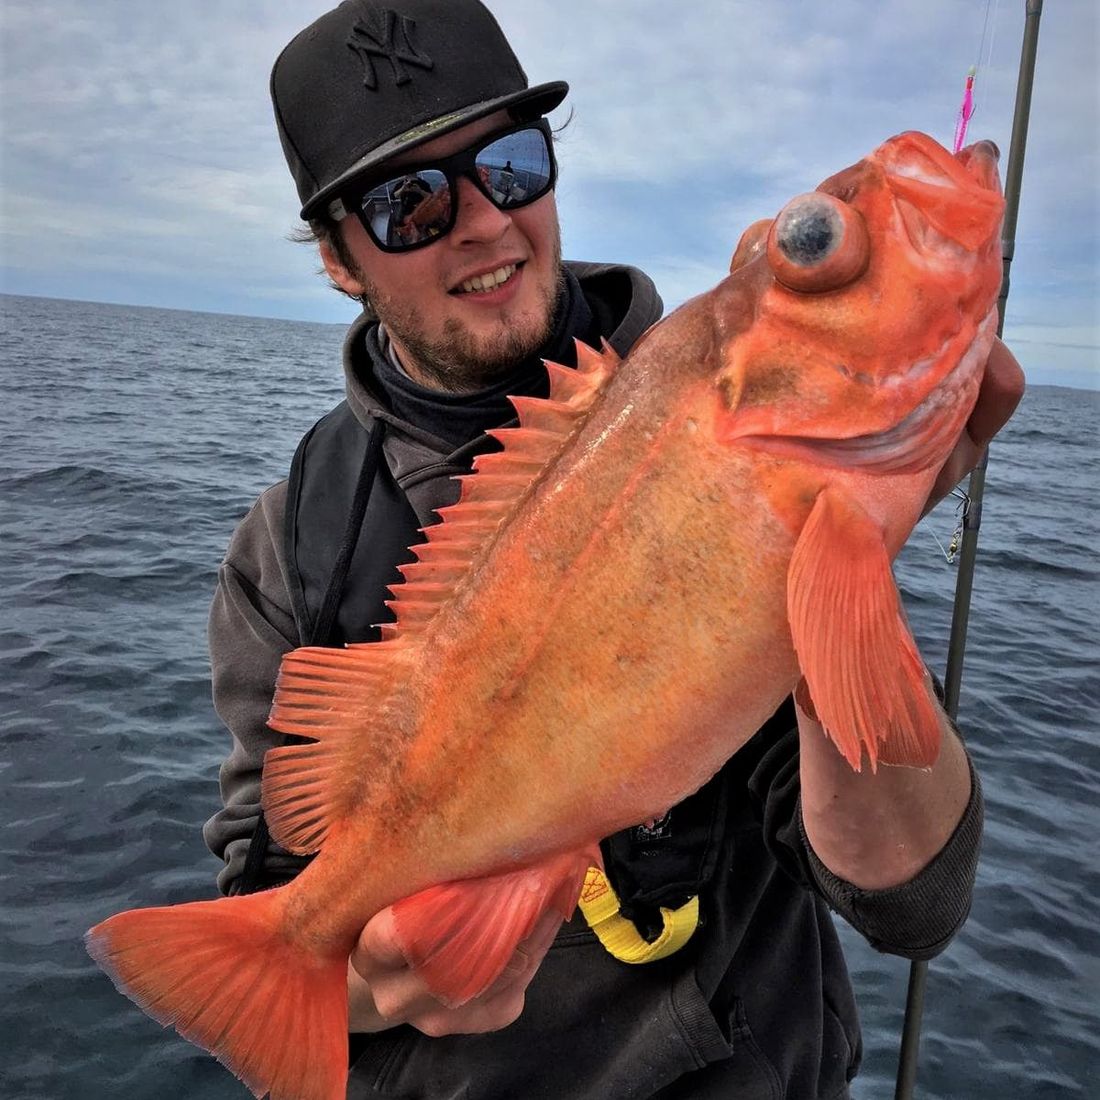 Mann med solbriller og caps holder frem rød fisk